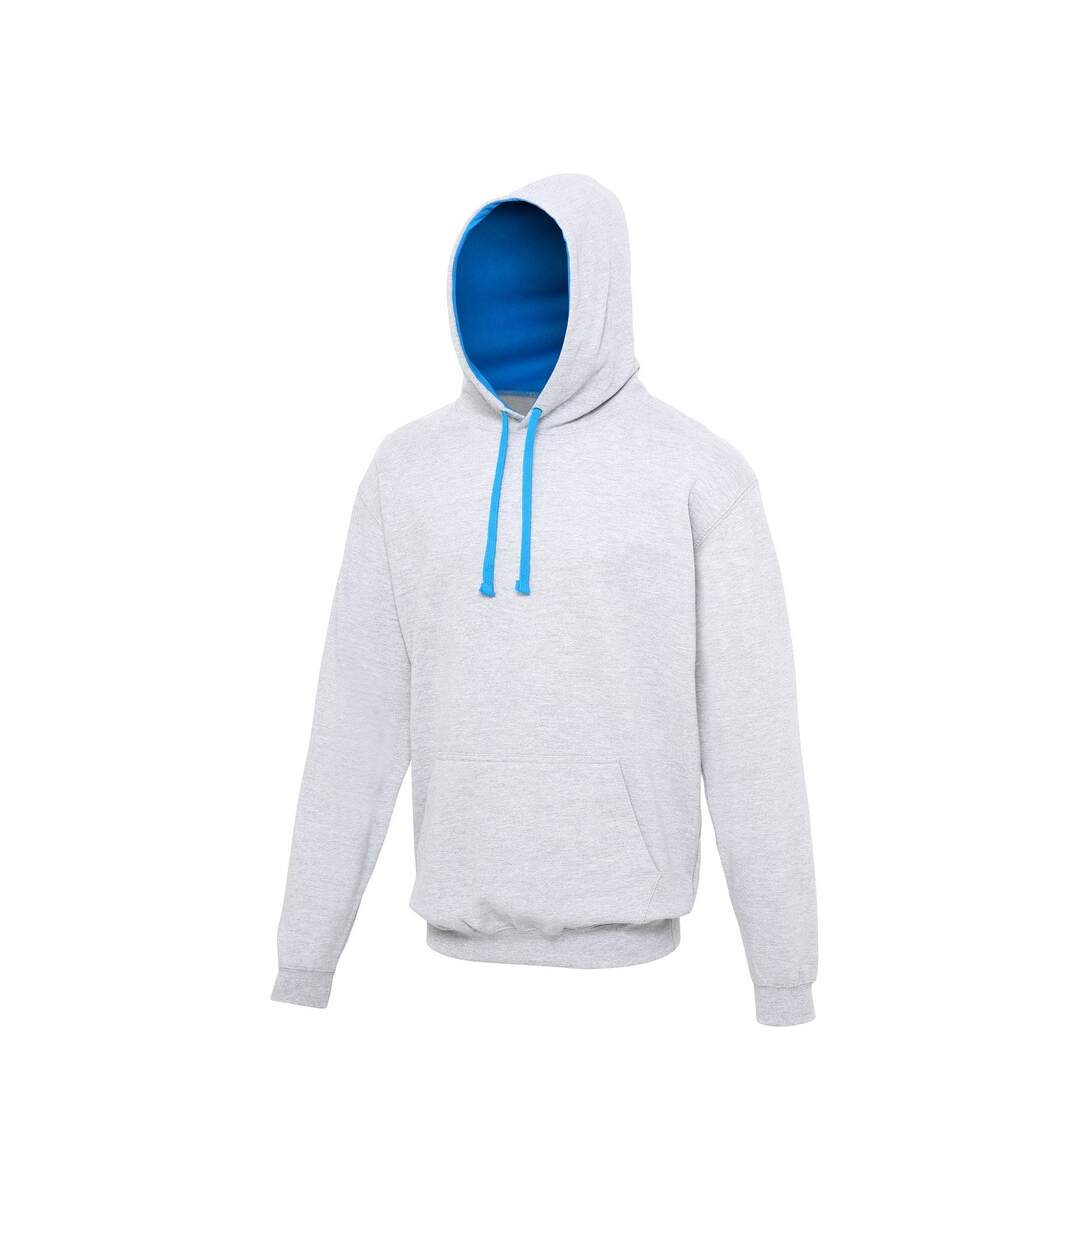 Awdis - Sweatshirt VARSITY - Homme (Gris chiné / bleu saphir) - UTRW165